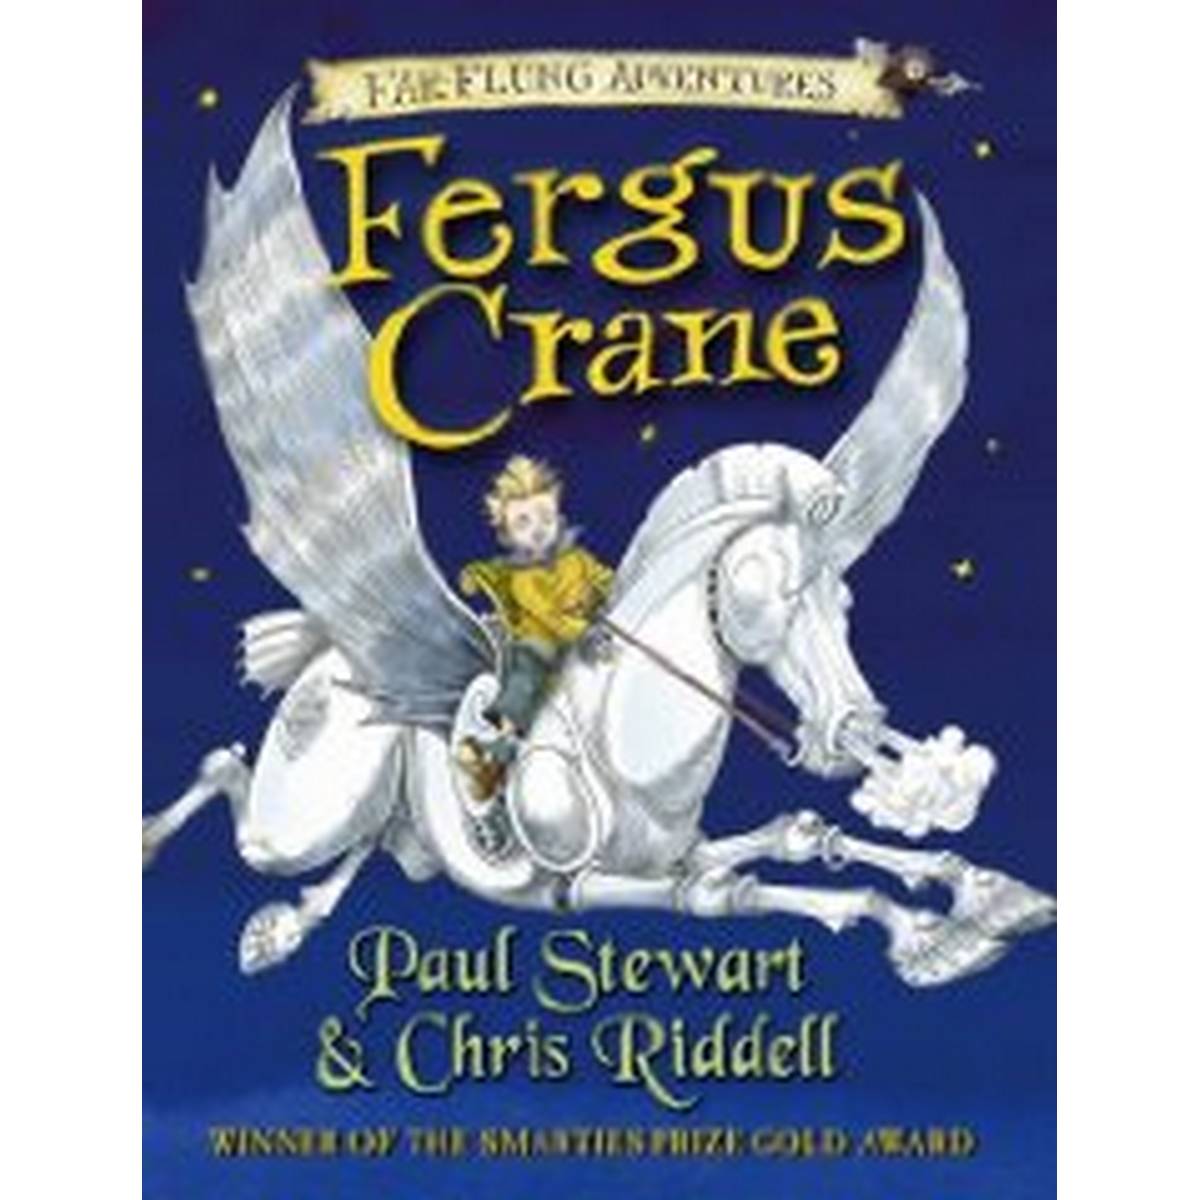 Fergus Crane (Far Flung Adventures)